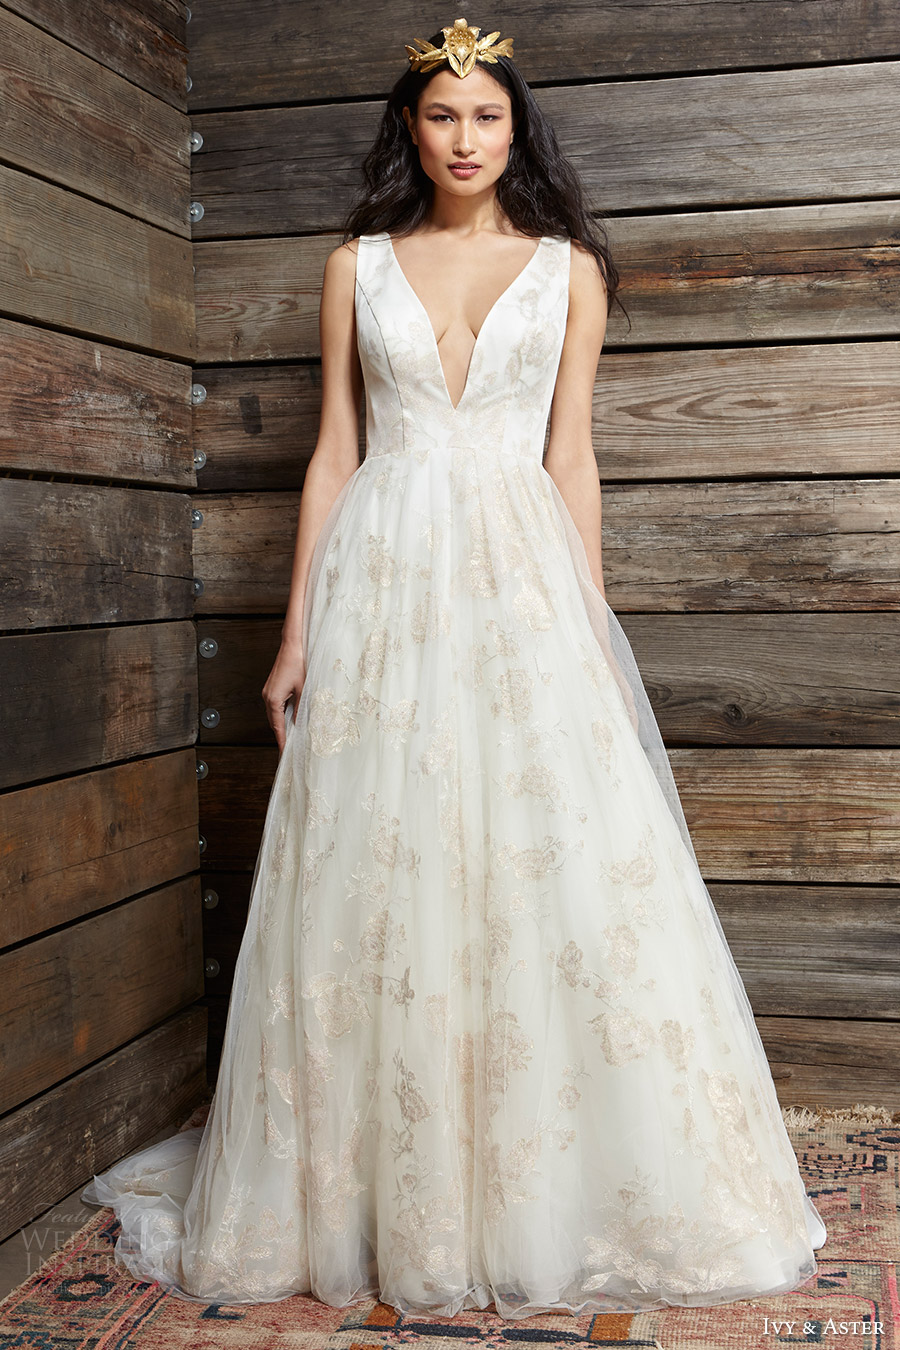 ivy aster bridal spring 2017 sleeveless deep vneck ball gown wedding dress (cherry blossom) fv